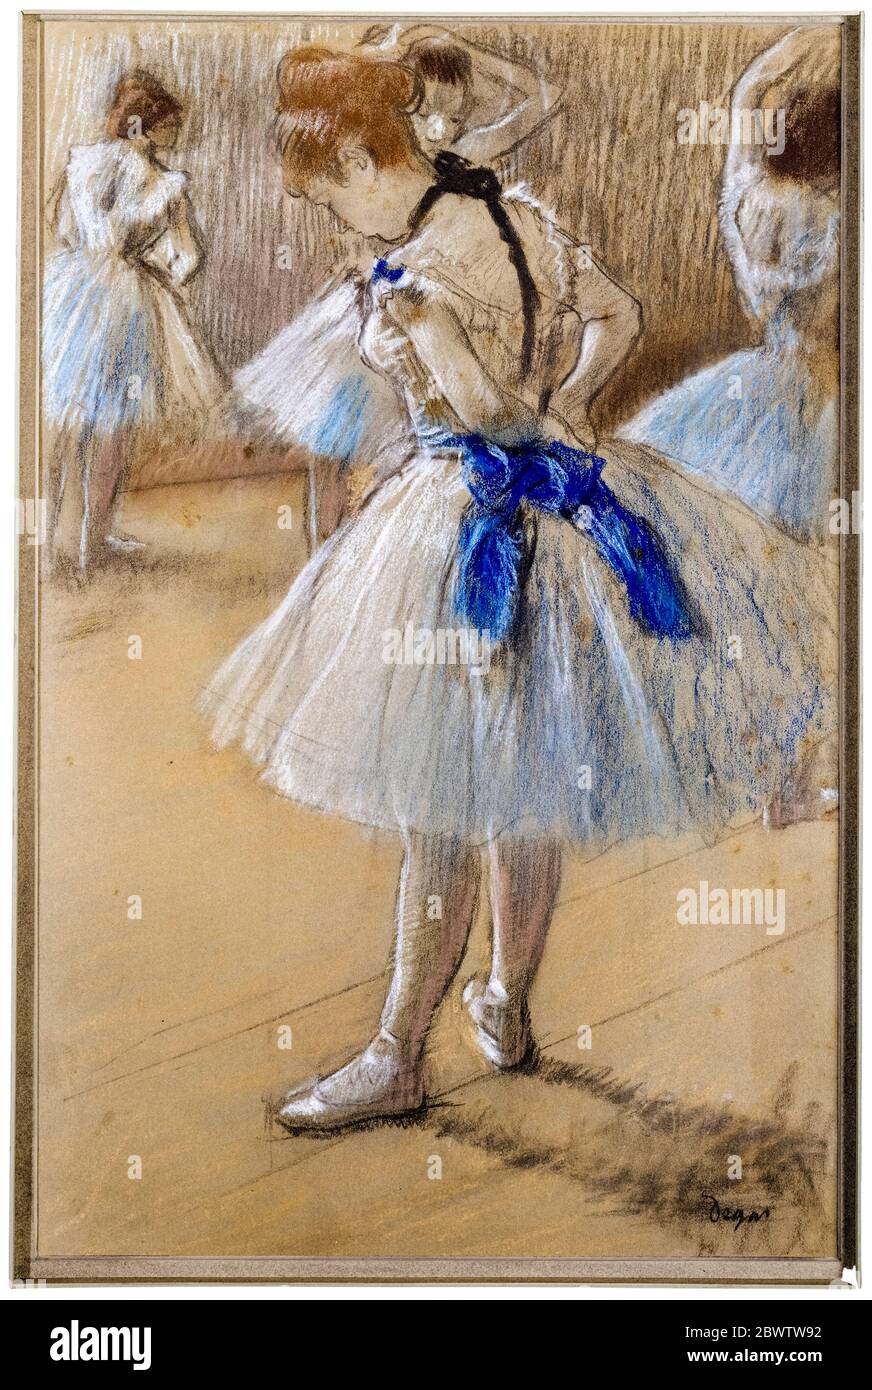 Edgar degas dancer hi-res stock photography and images - Alamy